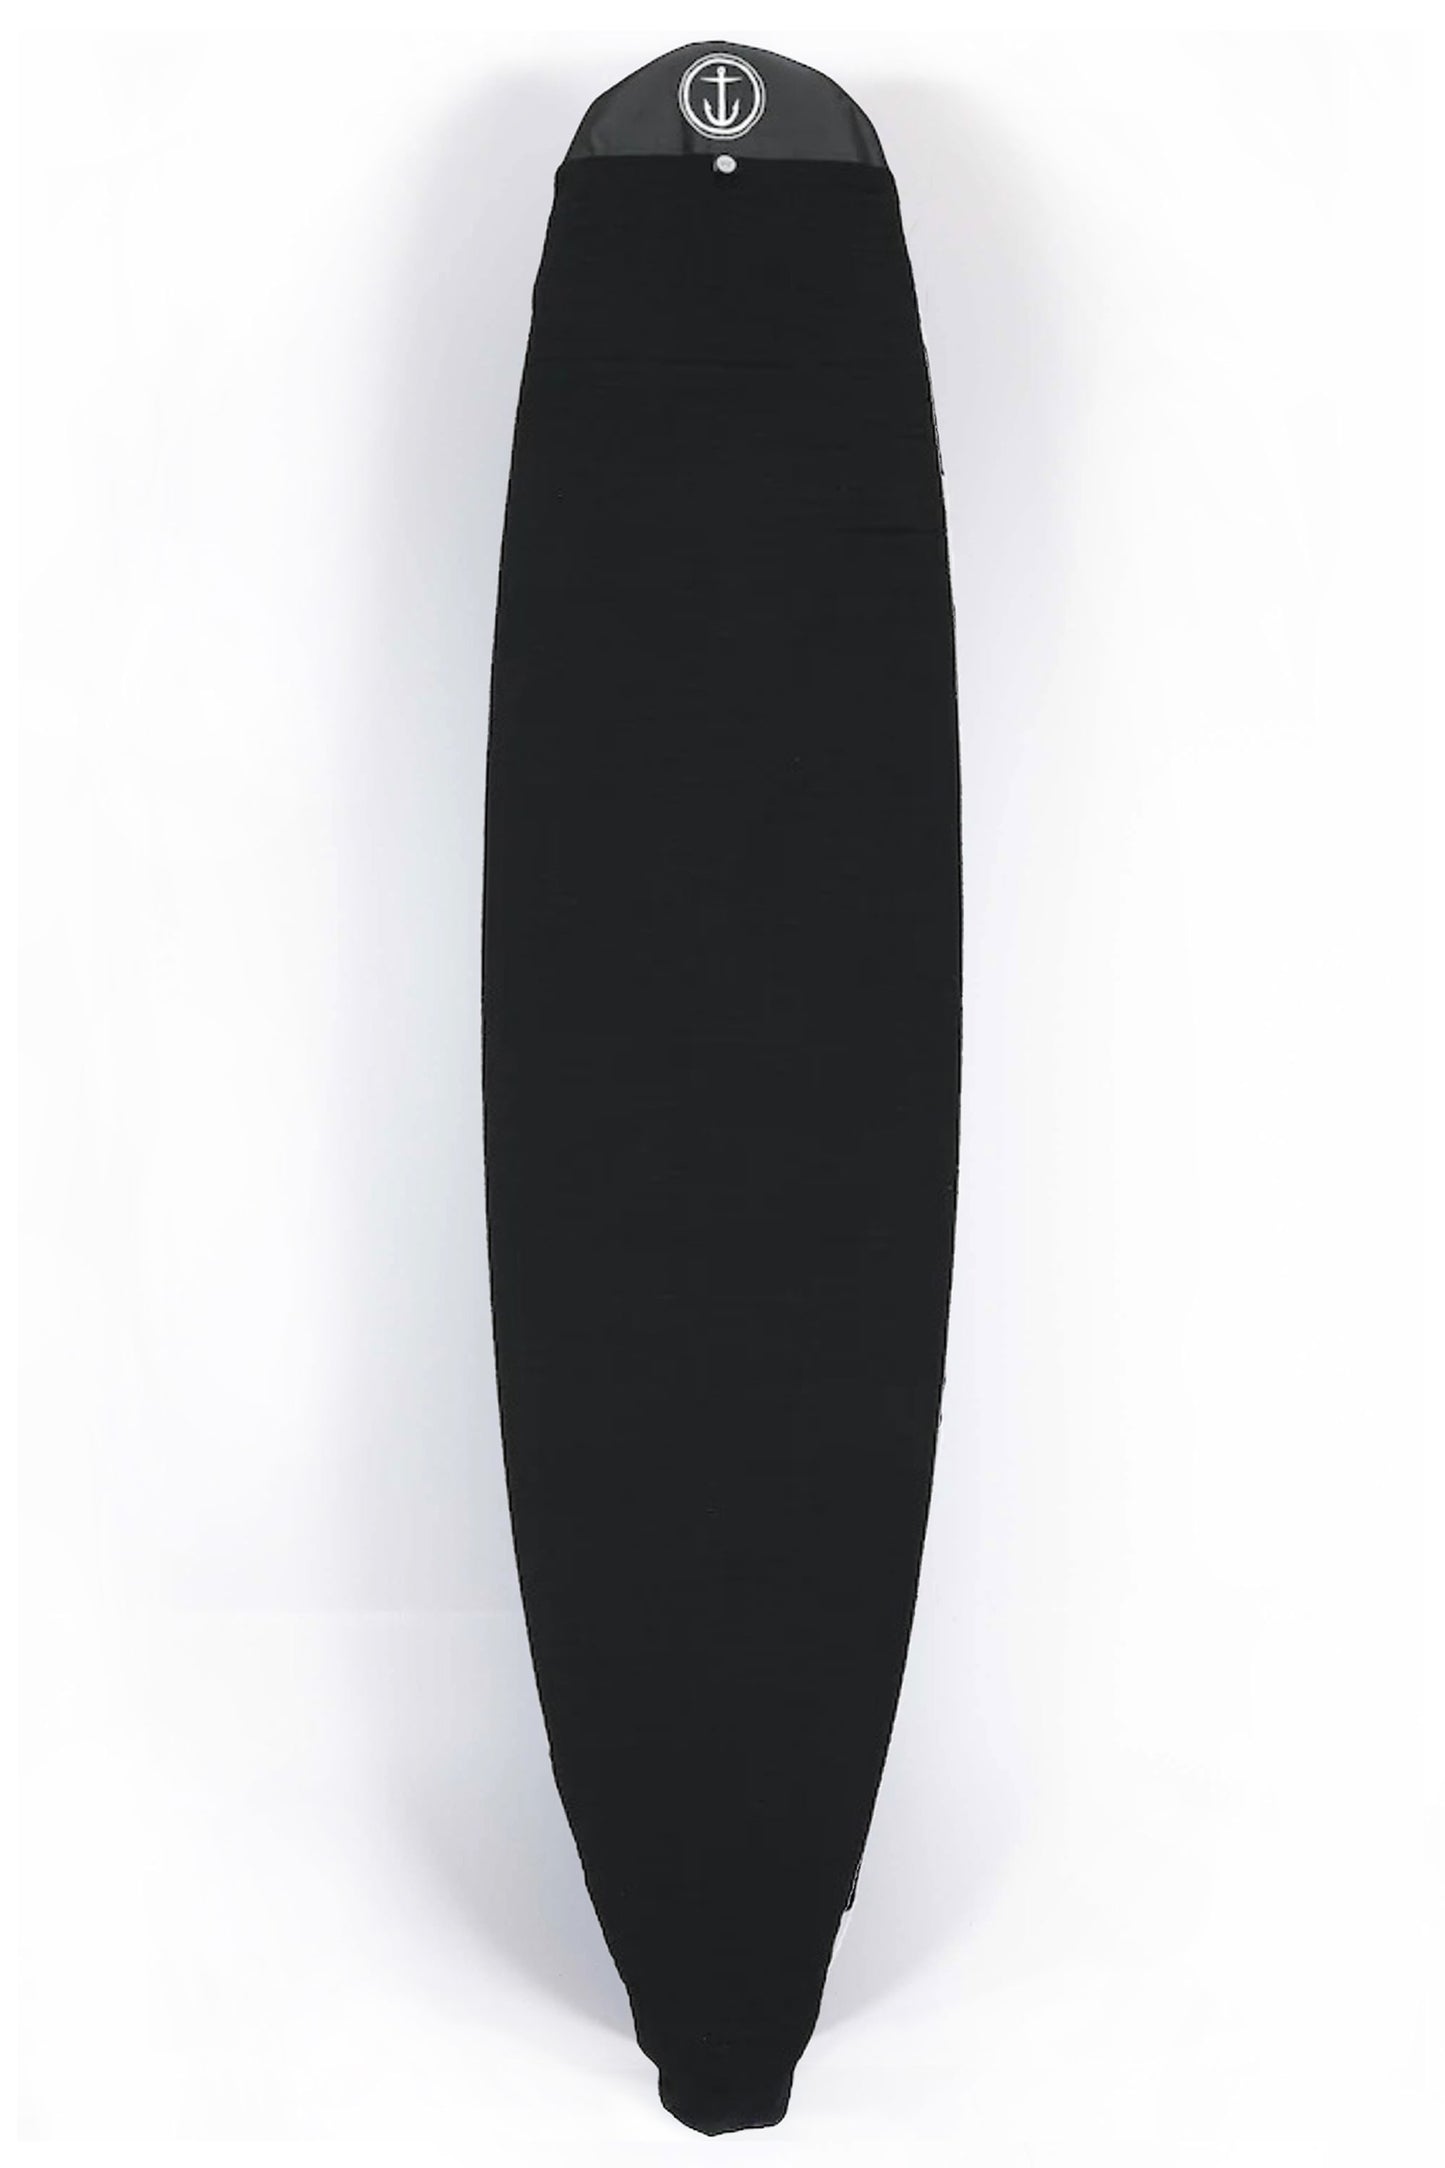 pukas-surf-shop-captain-fin-boardbag-sock-10-3-longboard-black